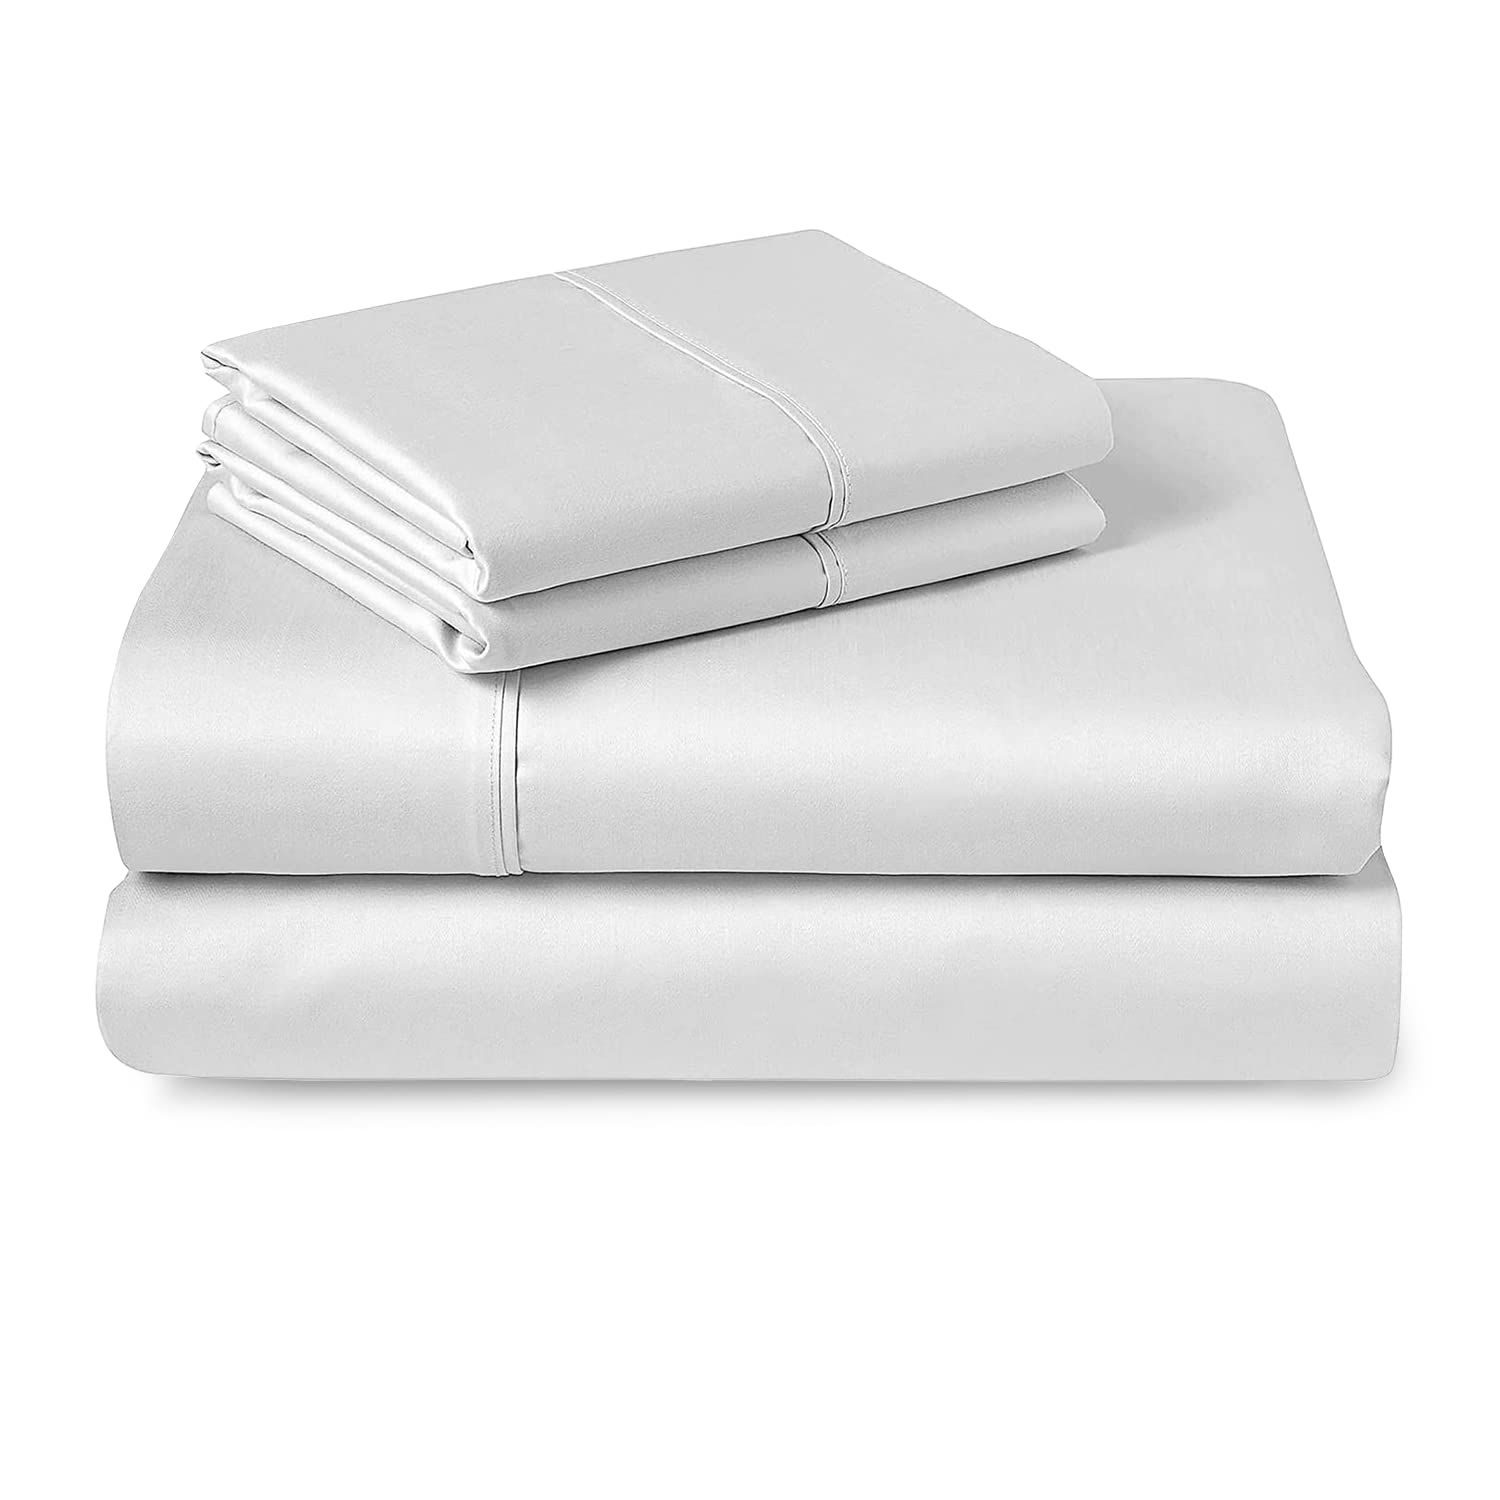 Pizuna 400 Thread Count Cotton Sheets Set King White, 100% Long Staple Cotton White King Sheets, Lux | Amazon (US)